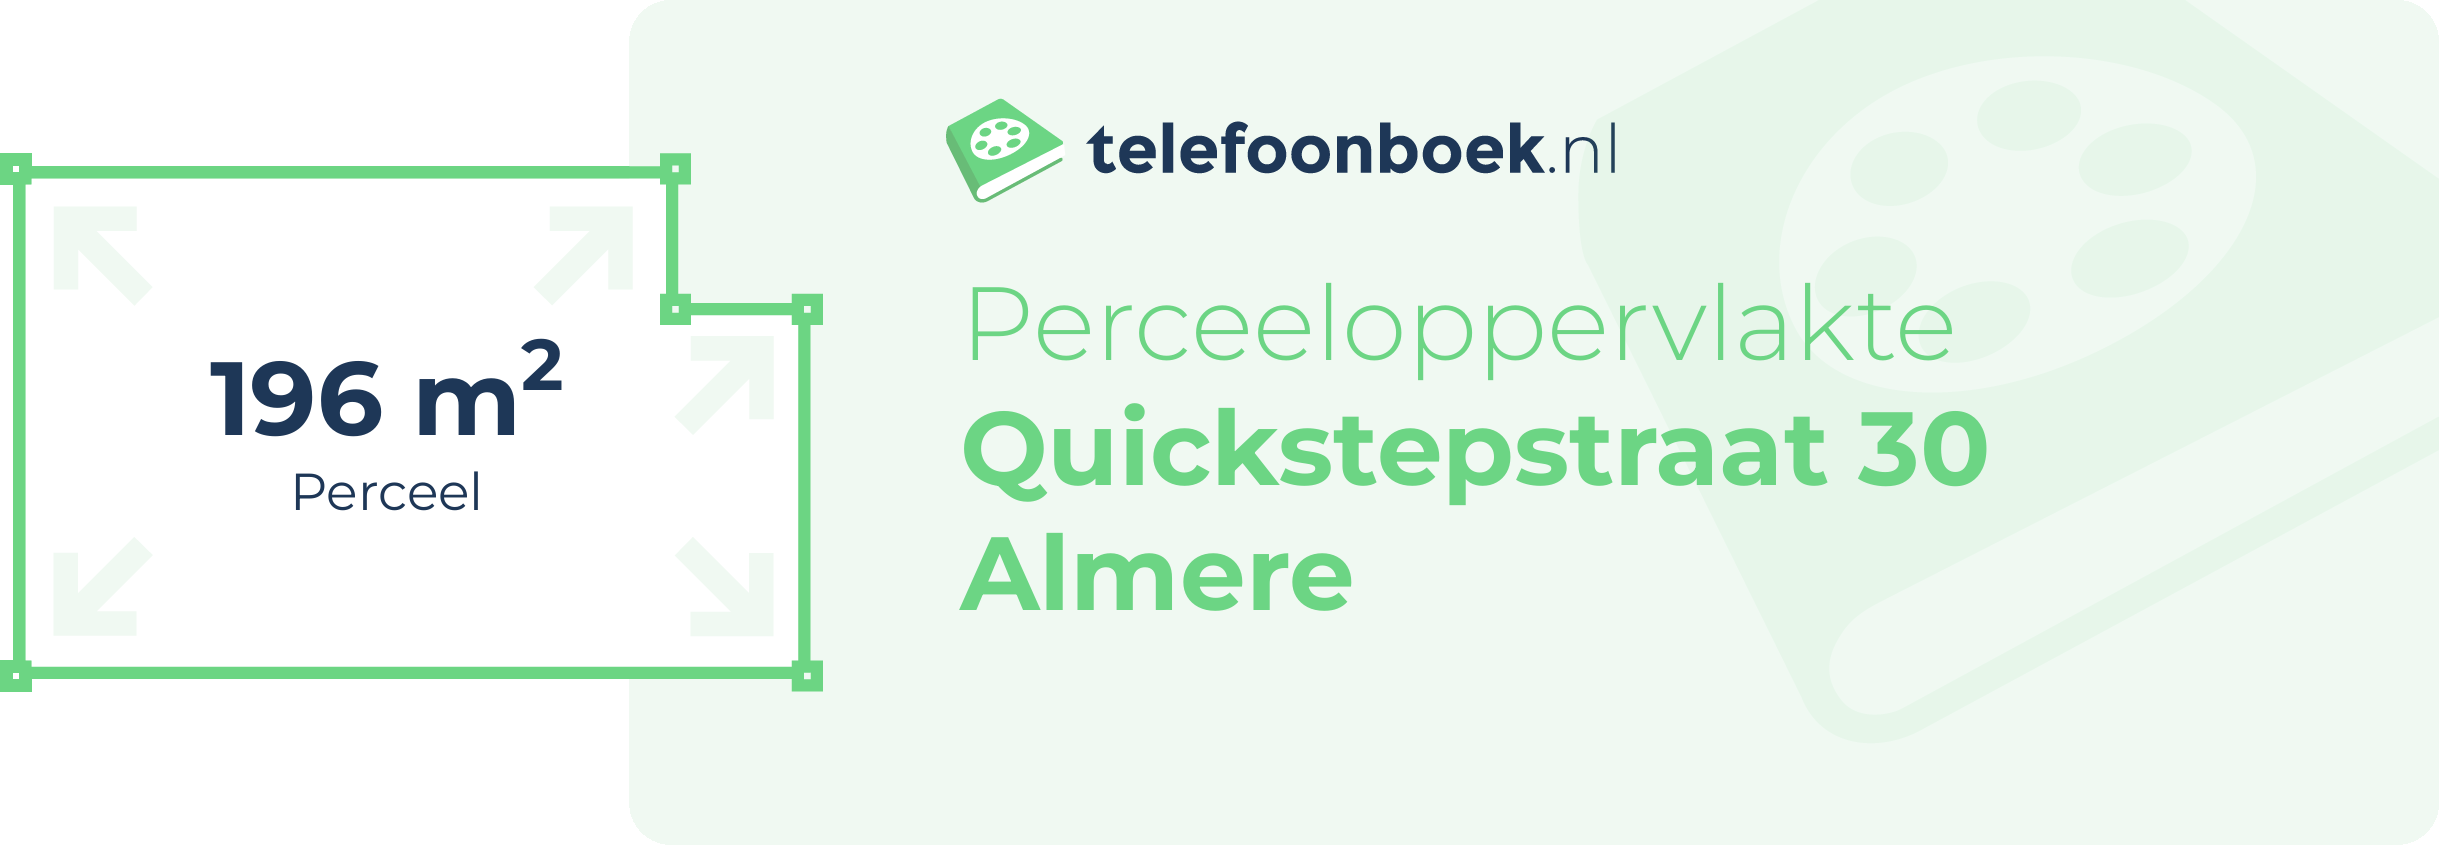 Perceeloppervlakte Quickstepstraat 30 Almere